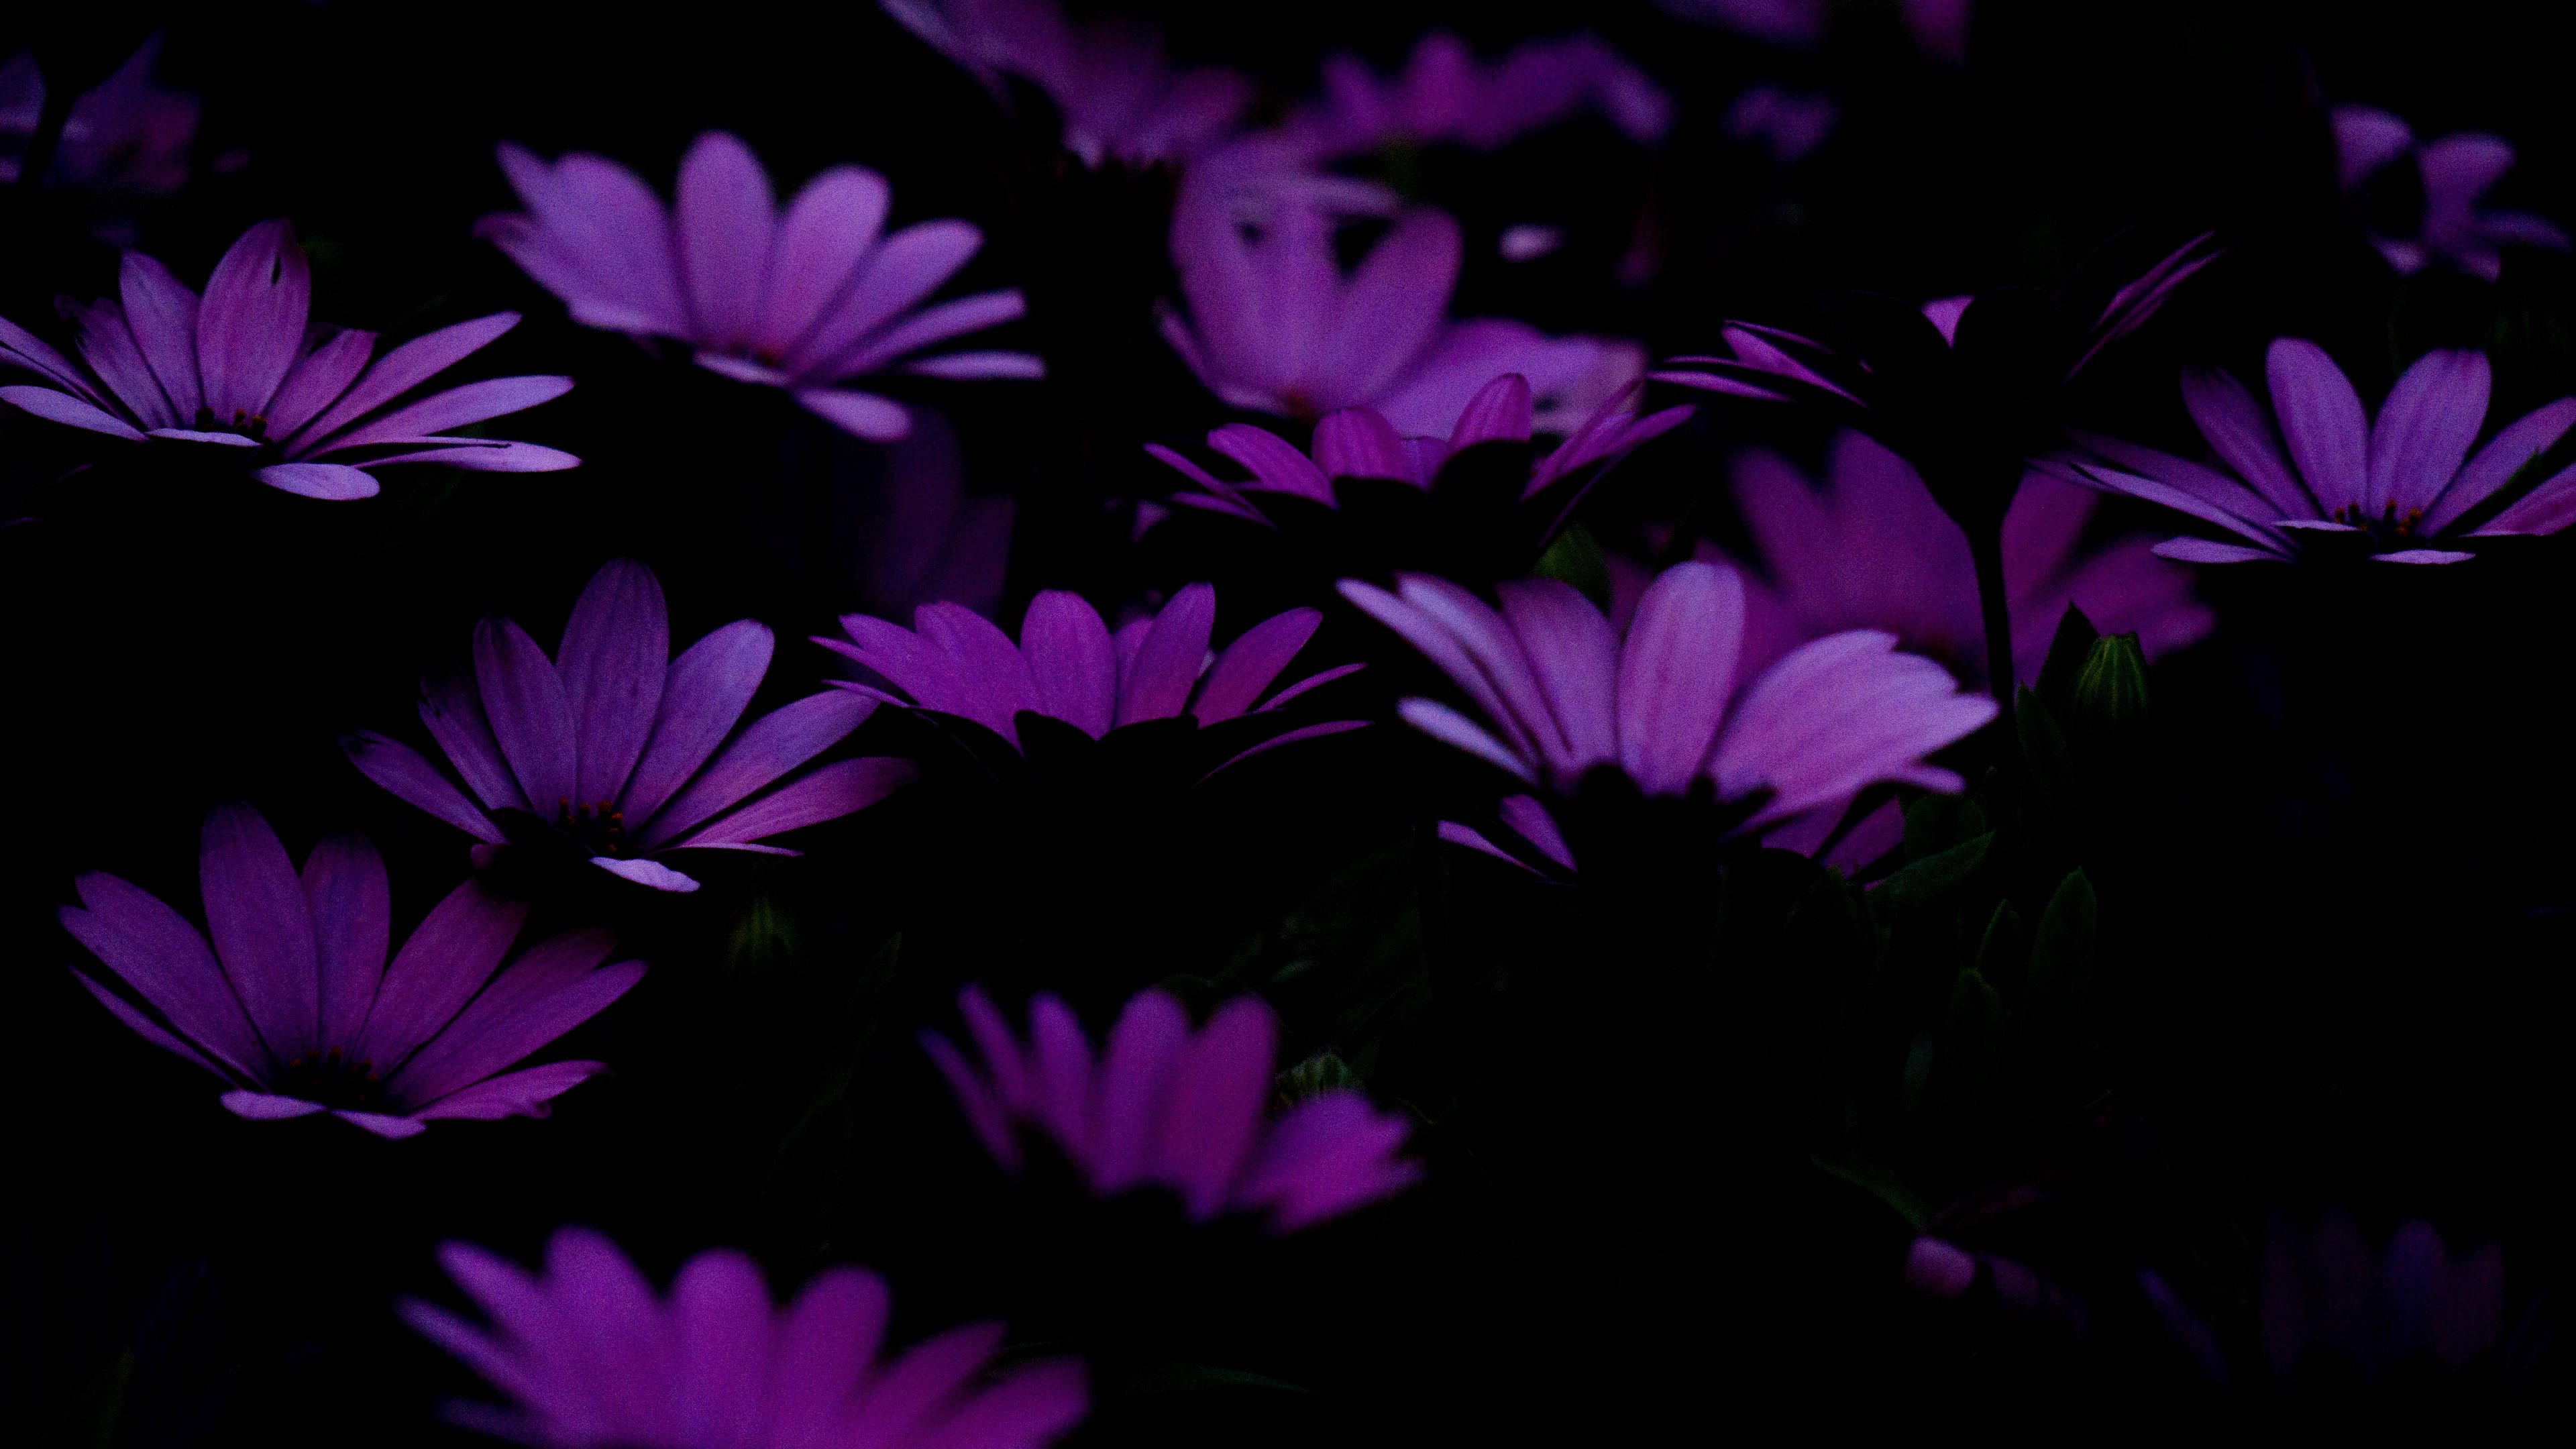 A group of purple flowers in the dark. - Dark purple